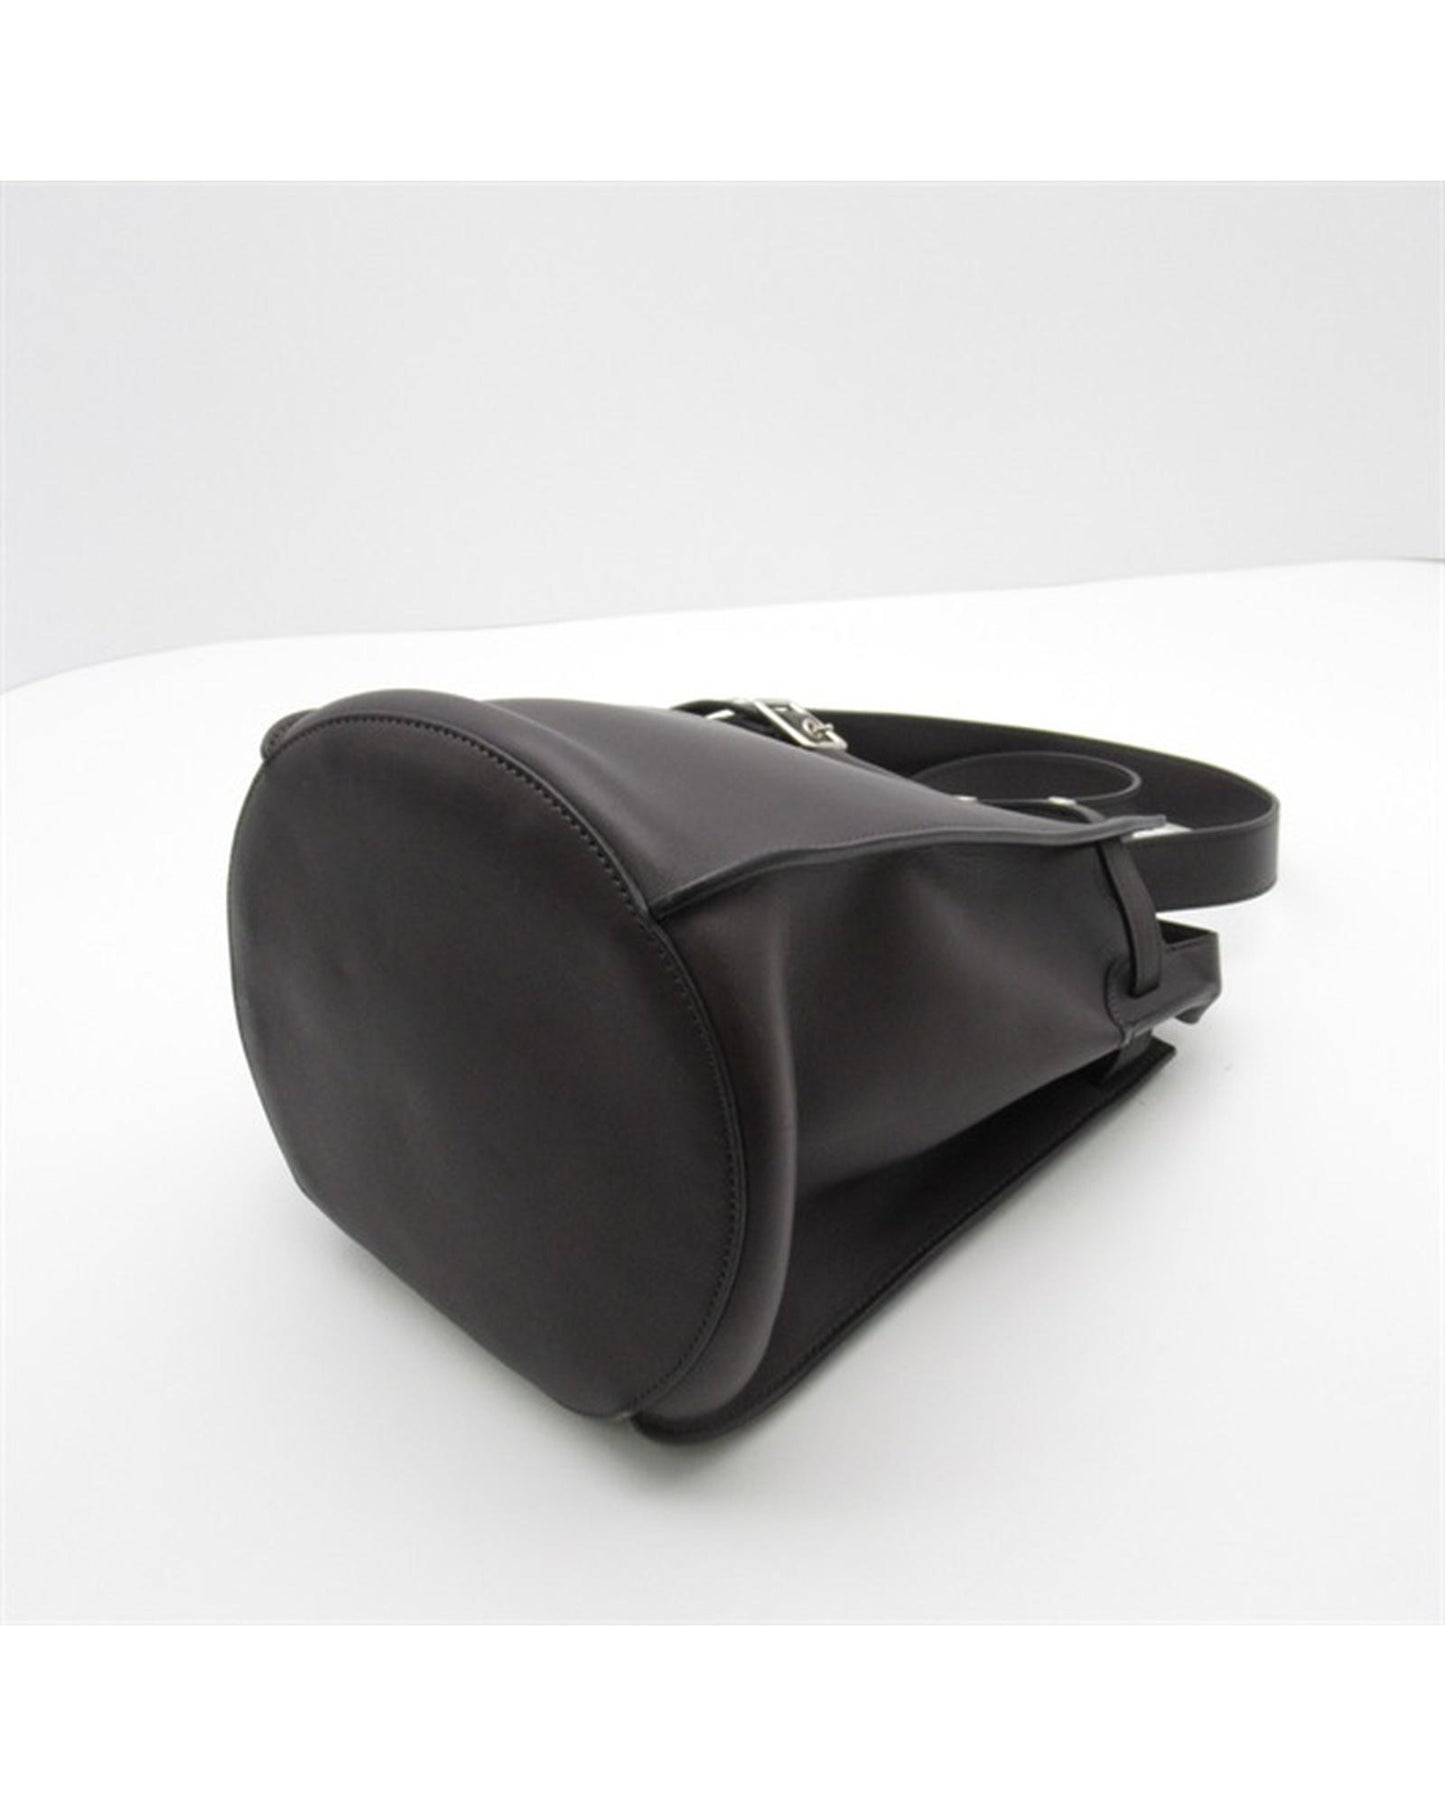 Celine Women's Excellent Condition Leather Bucket Bag in Brown